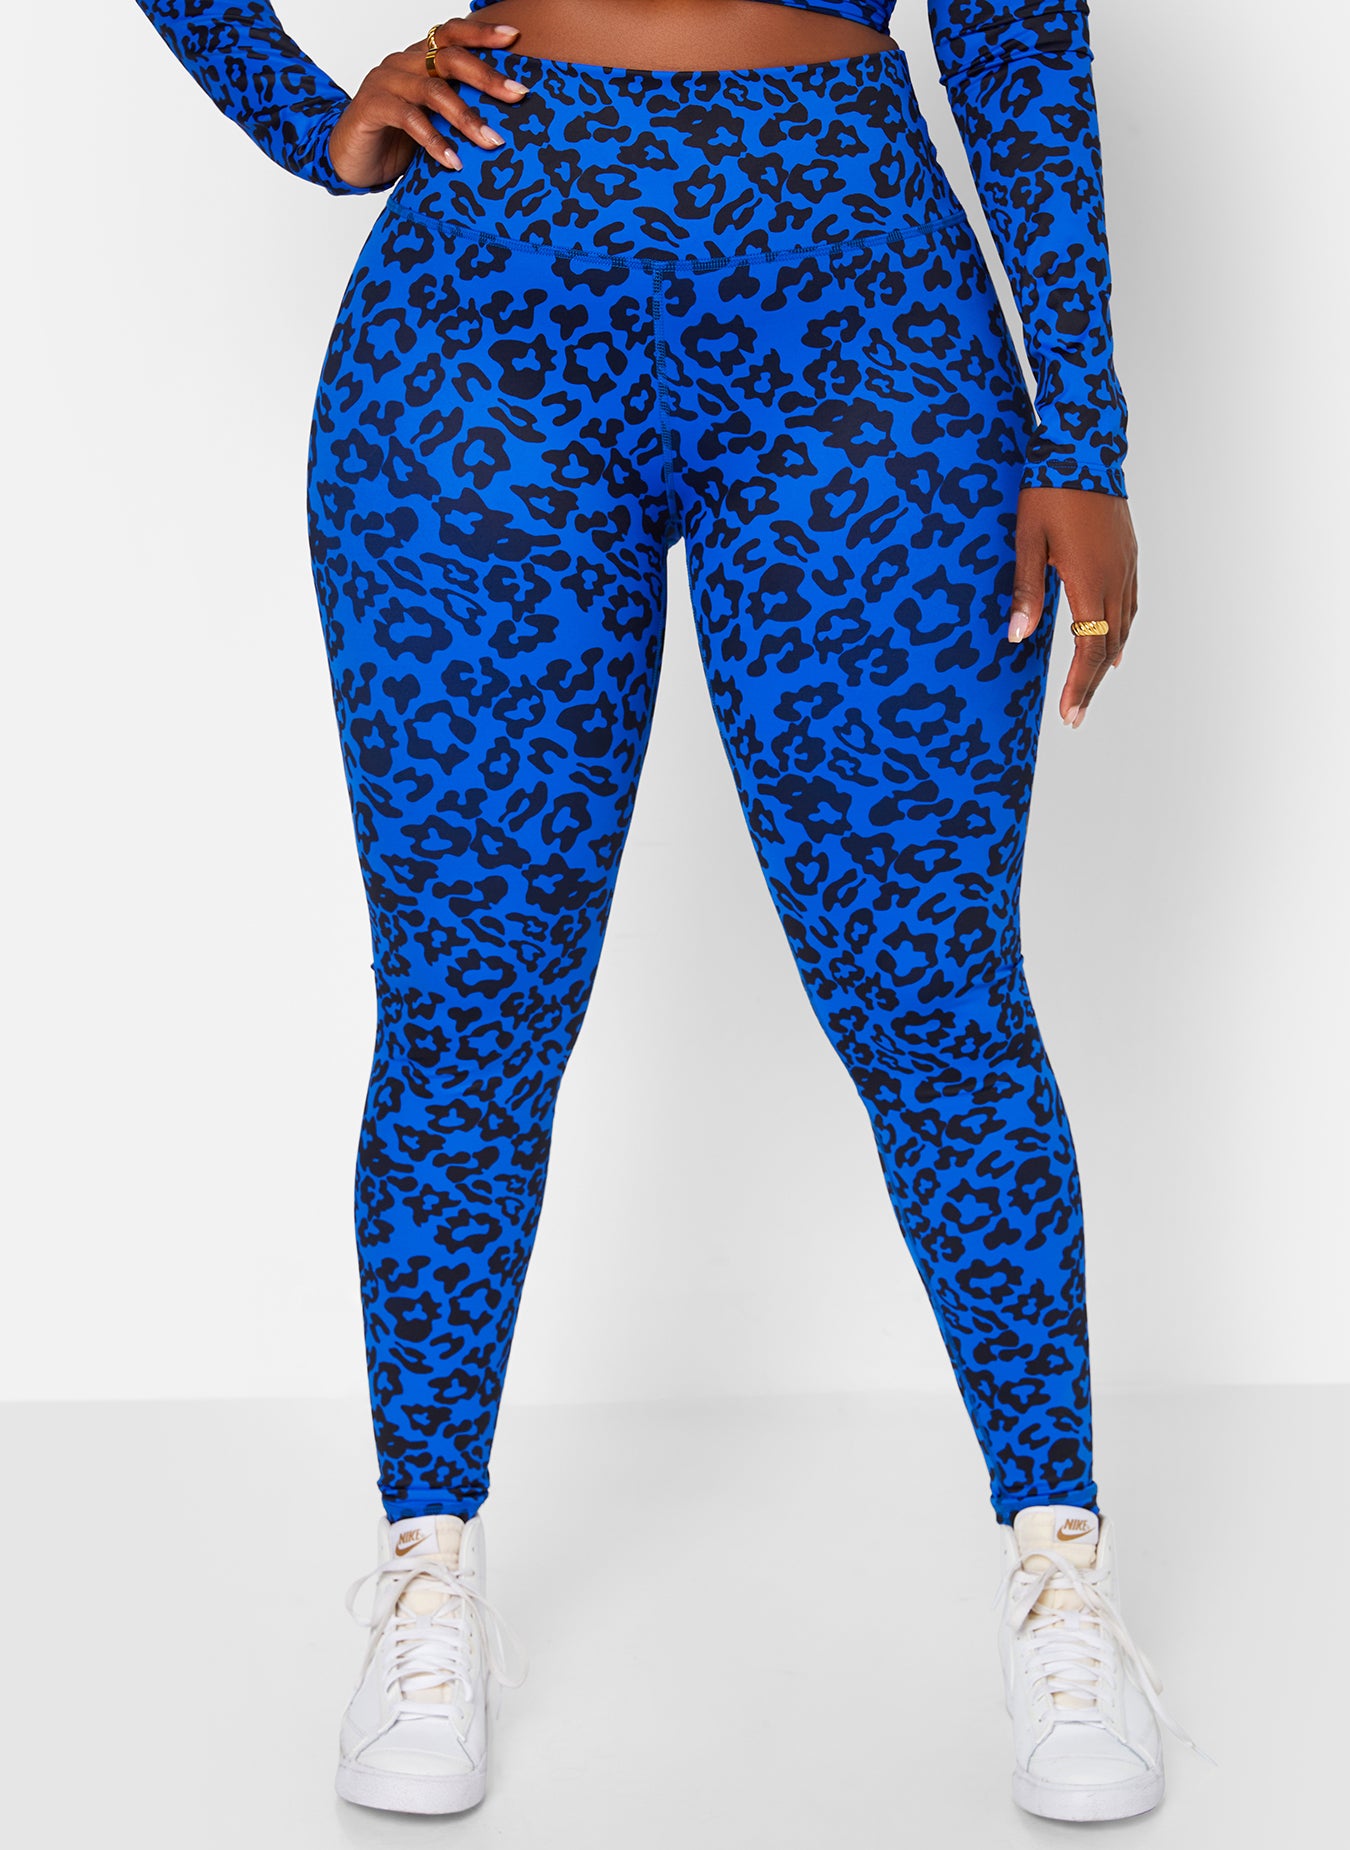 Nike Leopard Print Leggings  Leopard print leggings, Leopard nikes, Leopard  print